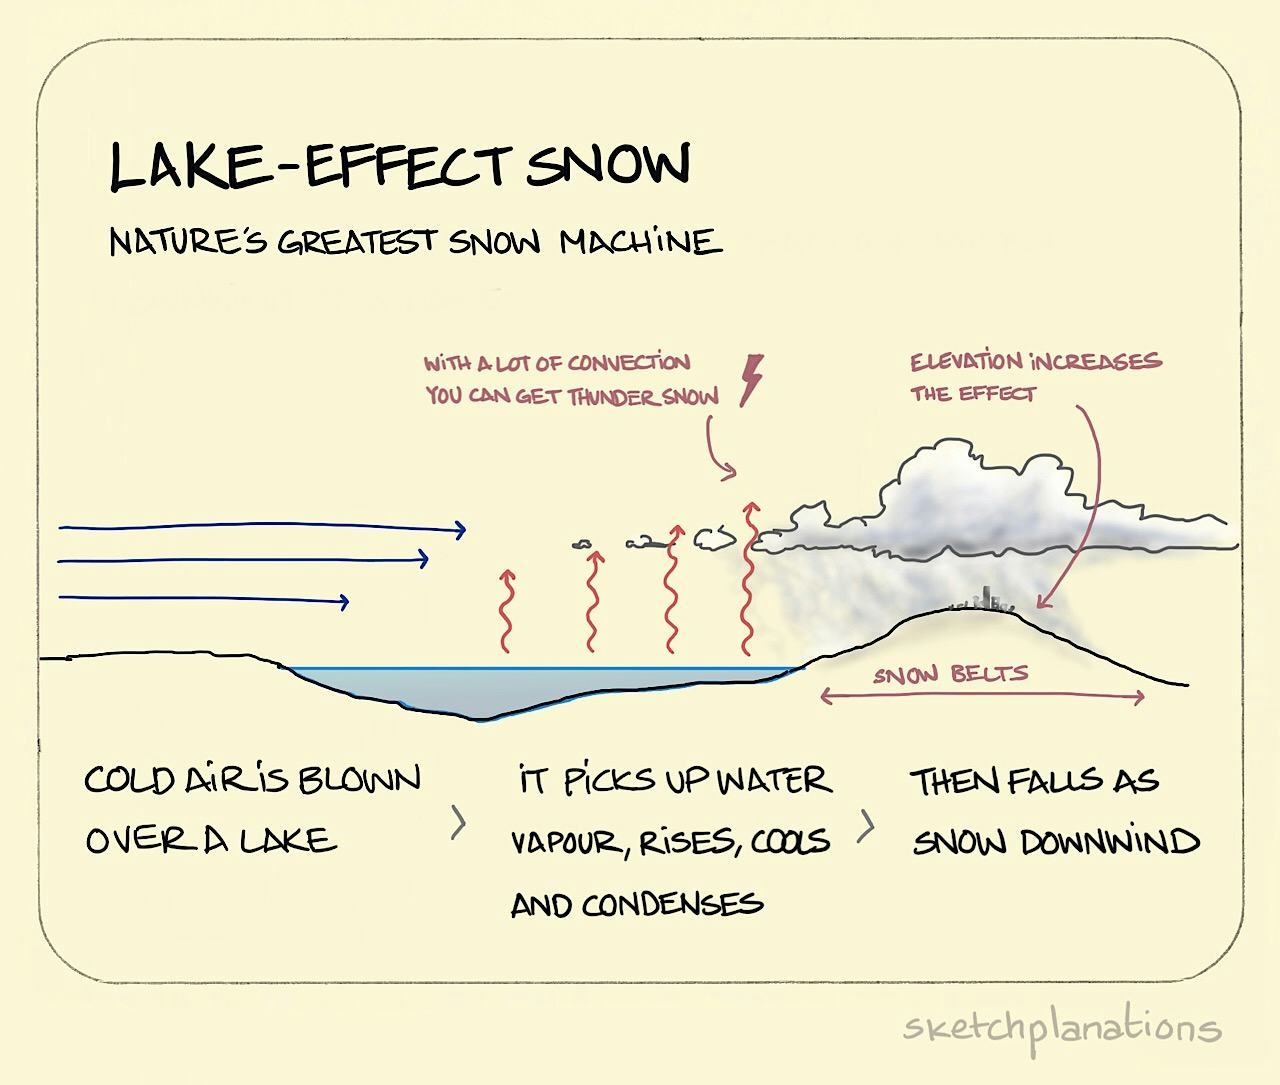 Lake-effect snow - Sketchplanations